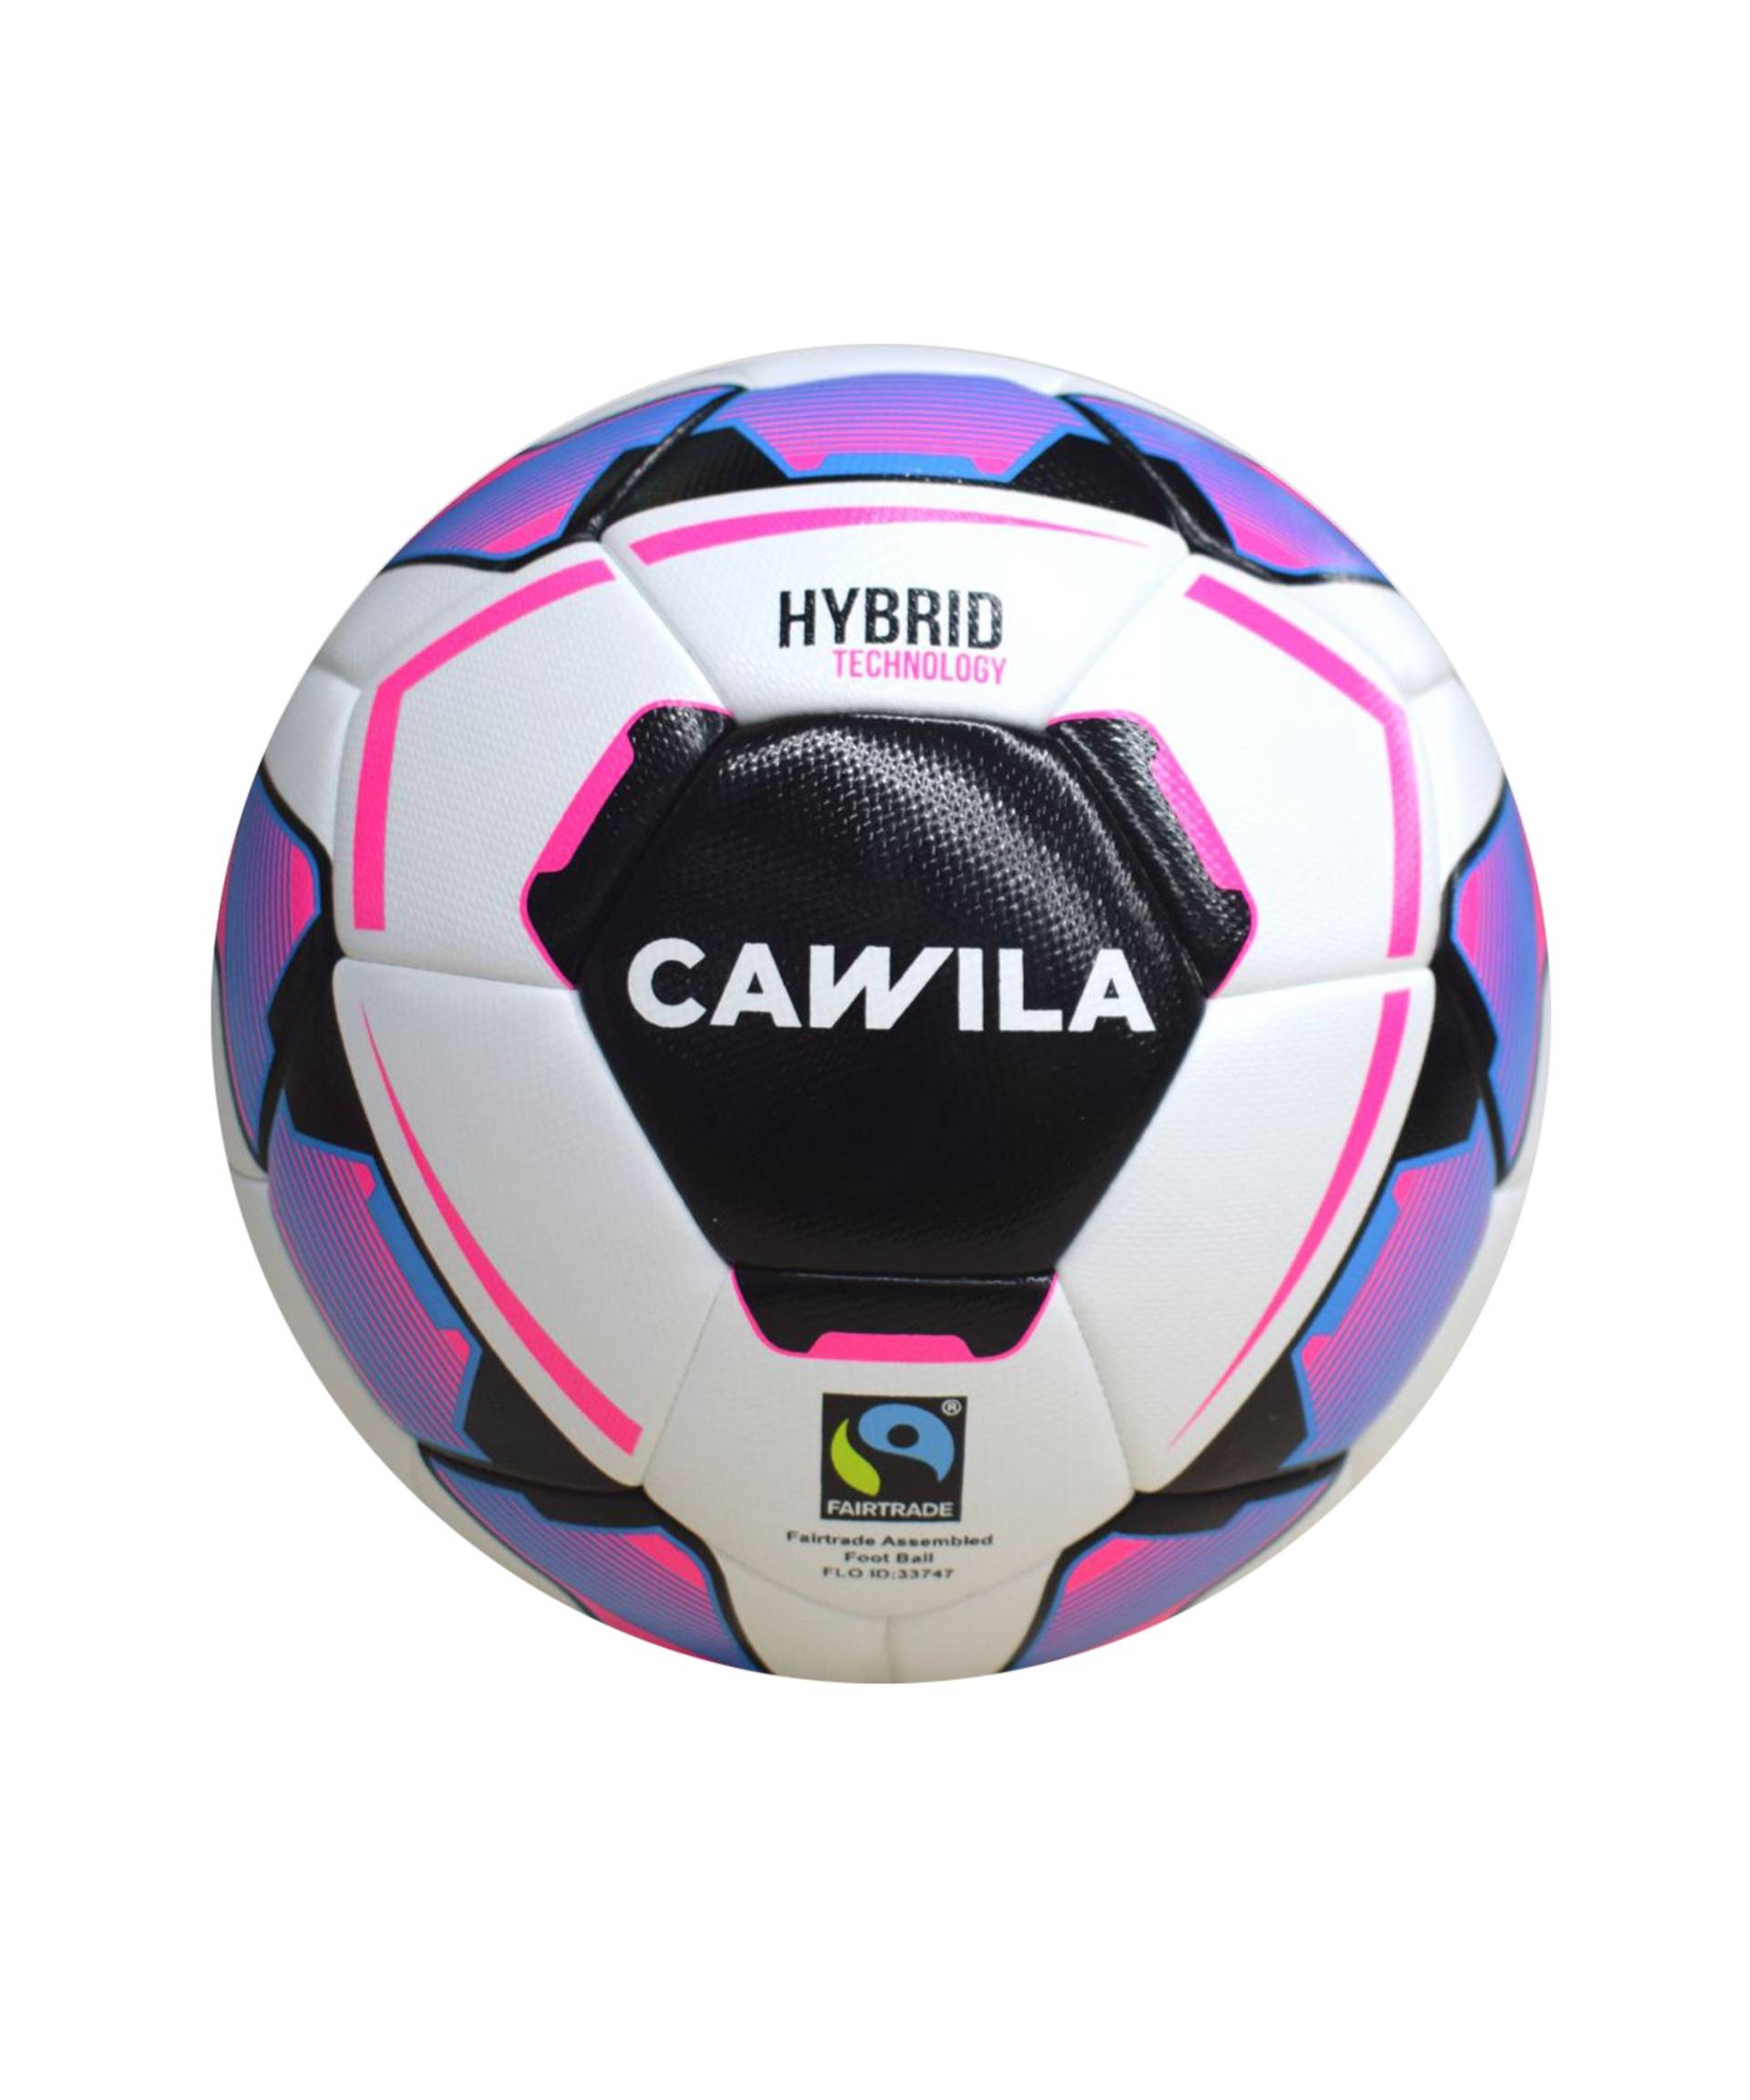 Cawila MISSION HYBRID X-LITE Fairtrade 290g Trainingsball Gr.3 von cawila